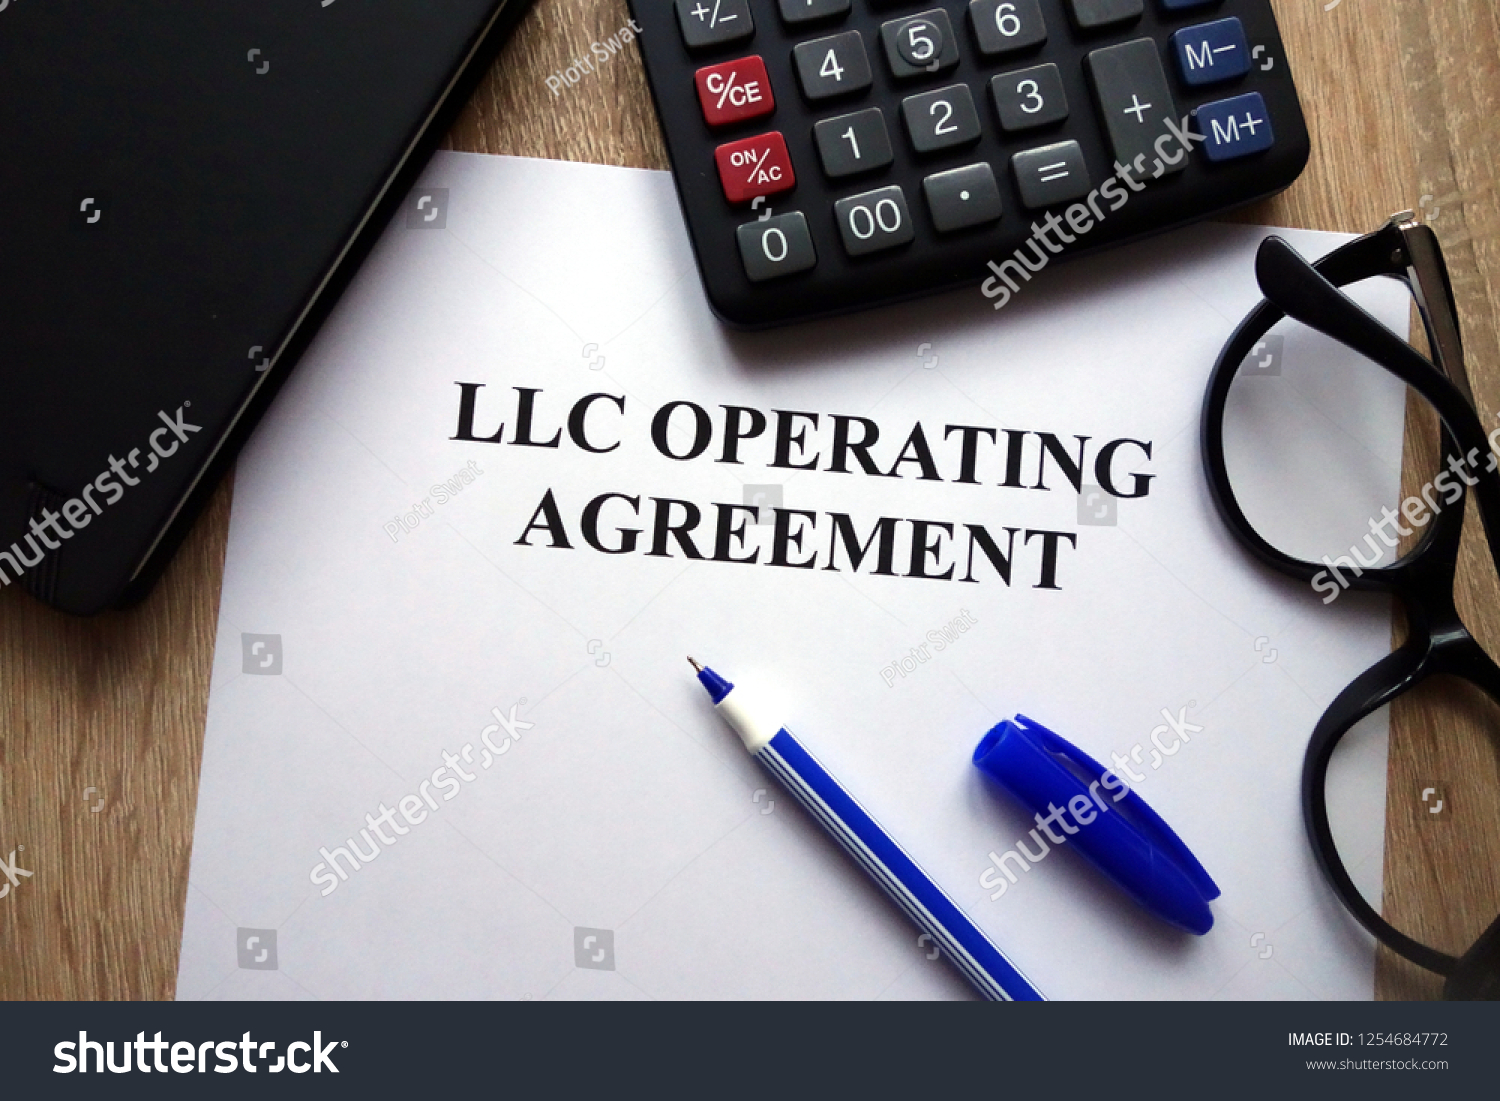 LLC operating agreement, pen, glasses and calculator on desk #1254684772